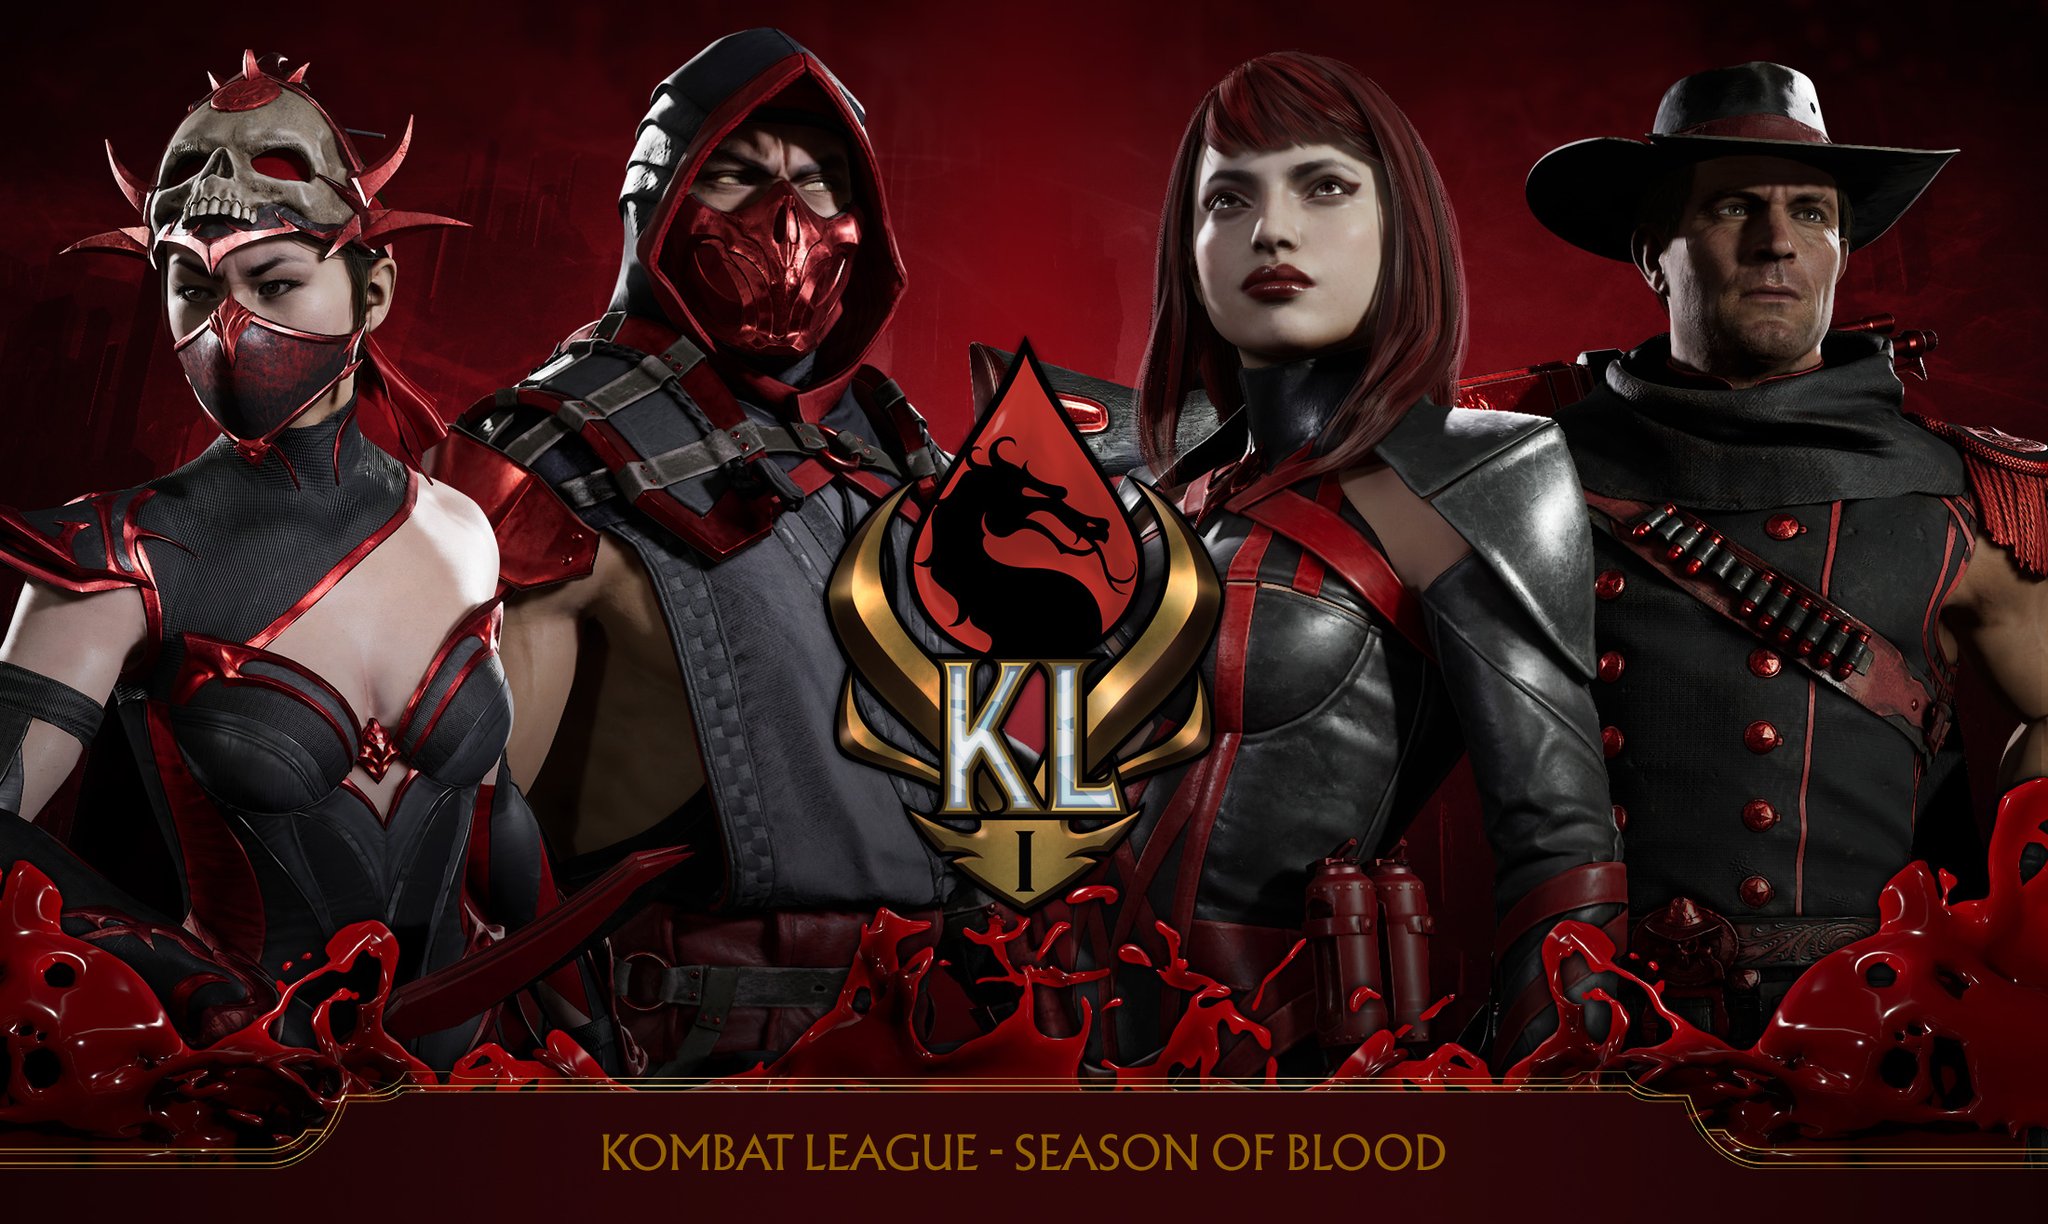 Kombat League - Season of Blood